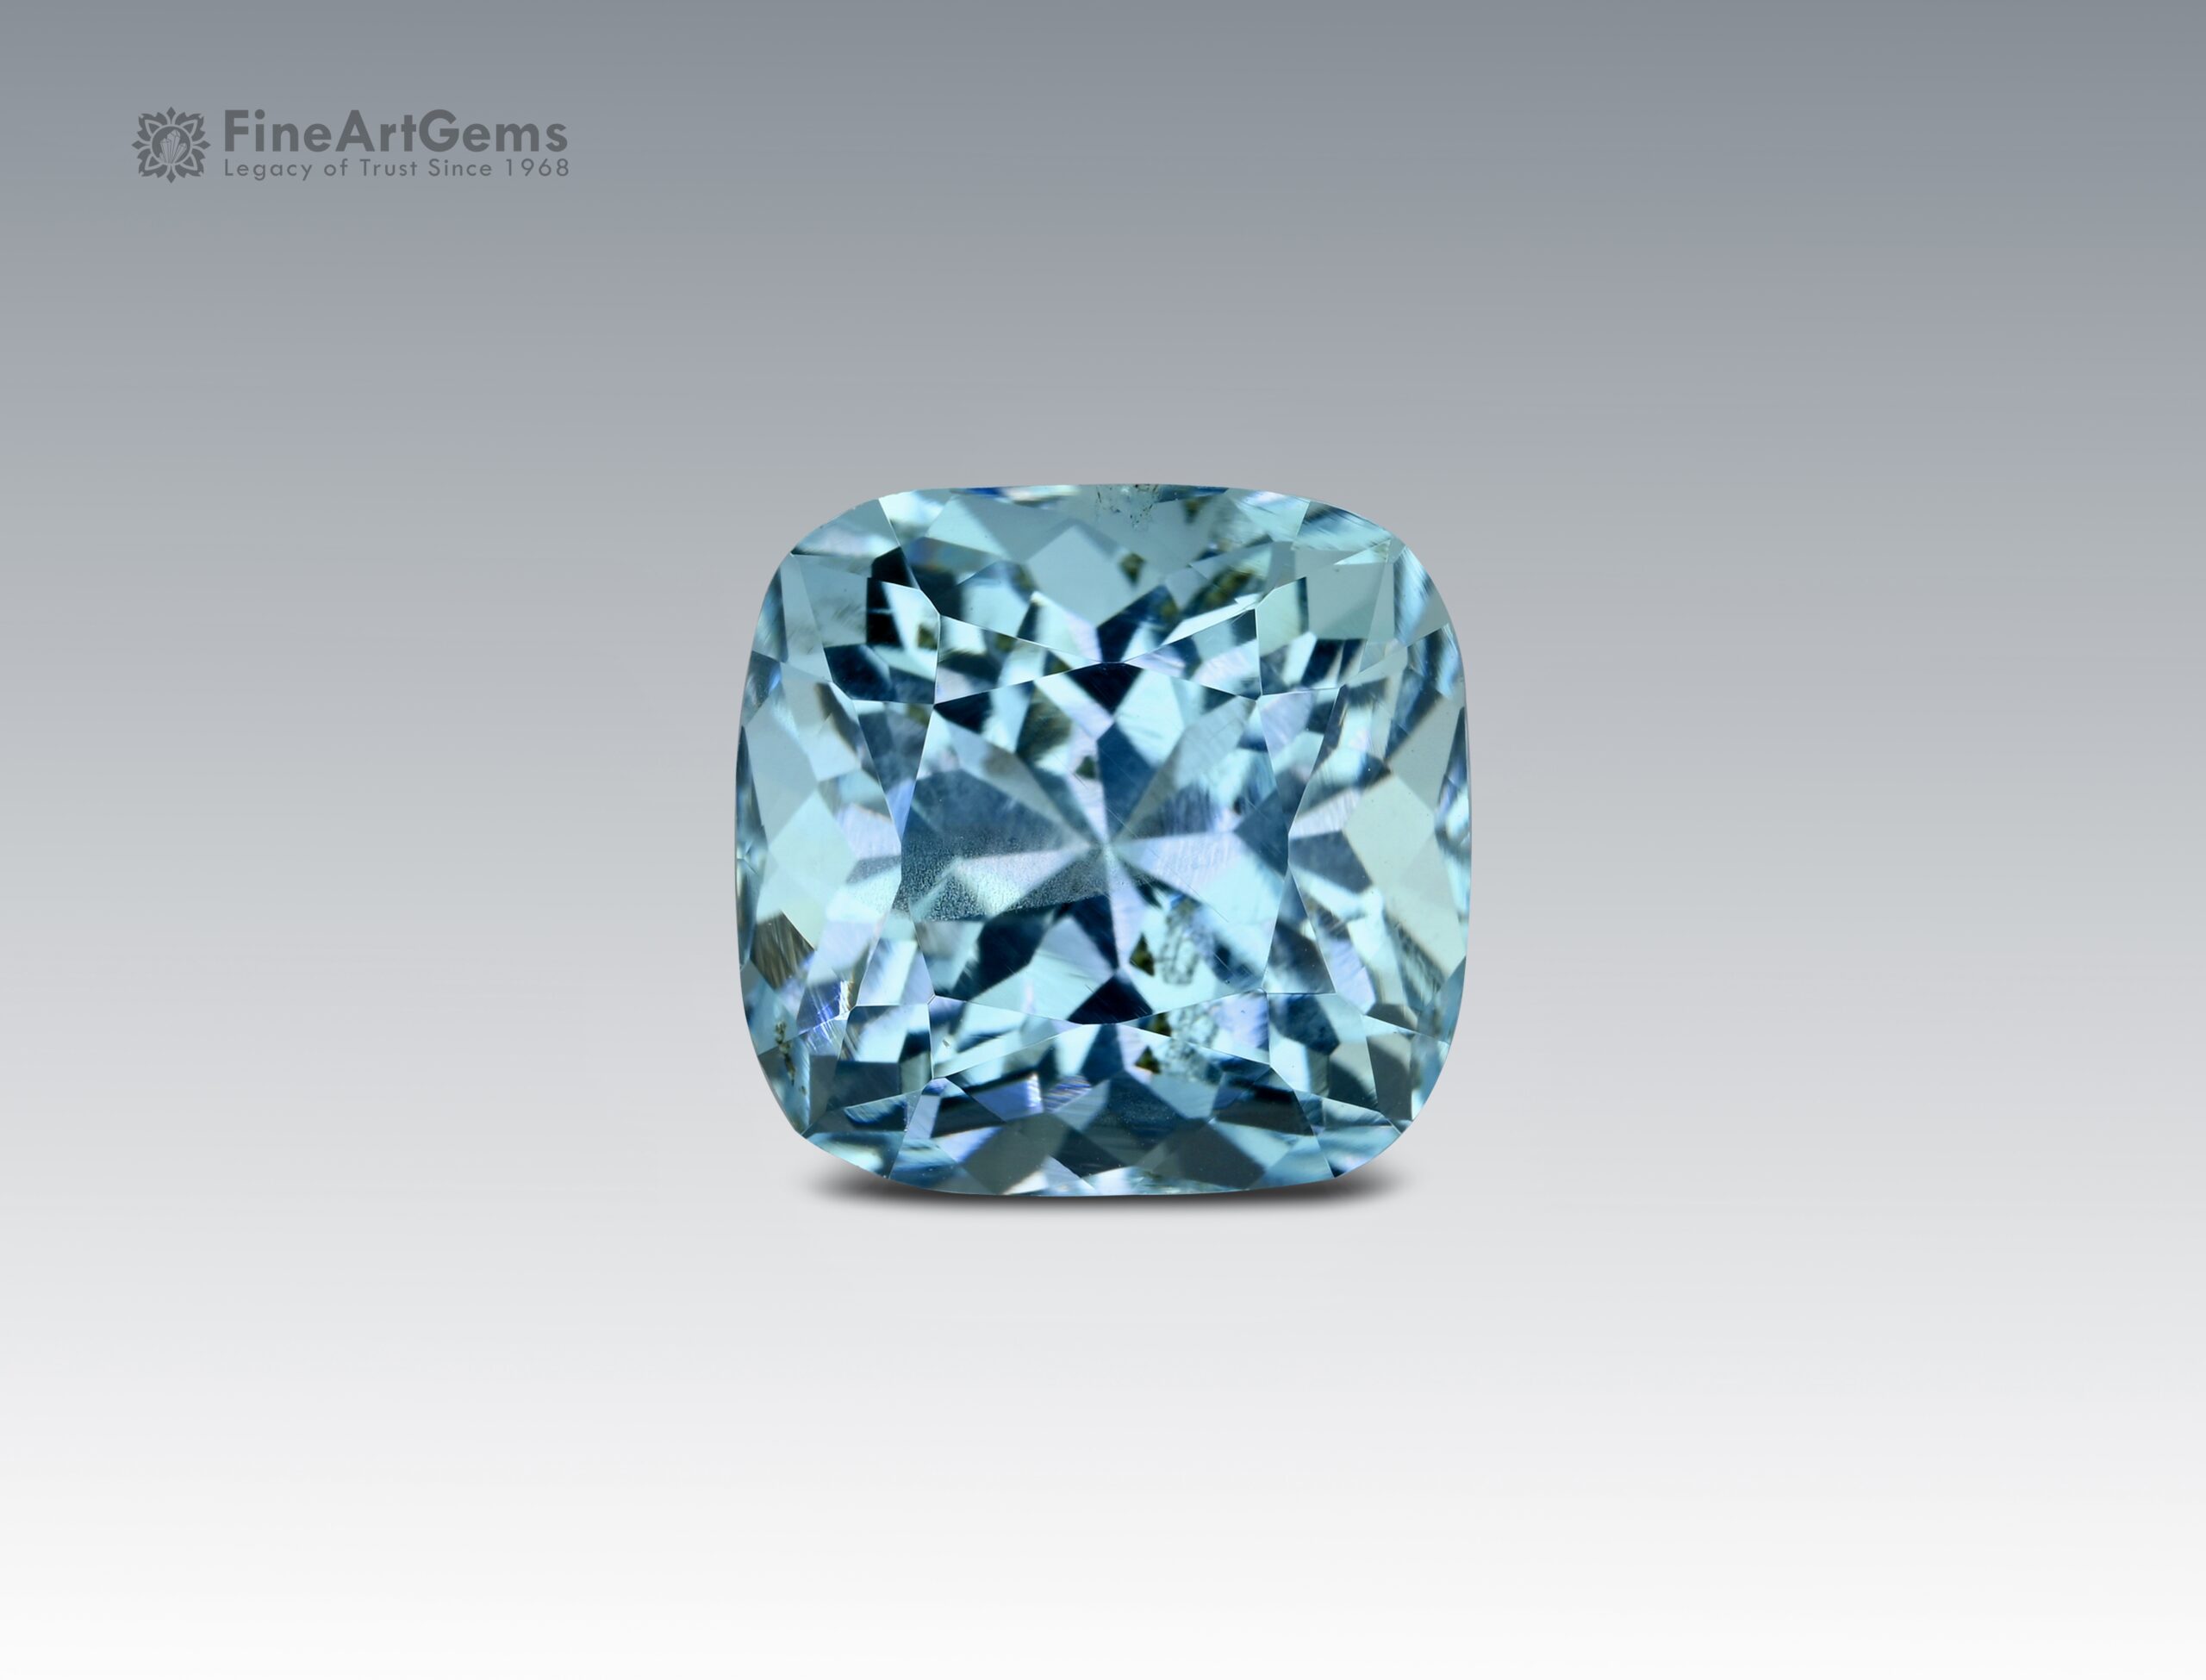 5.4 Carats Marvelous Vivid Blue Aquamarine Natural Gemstone